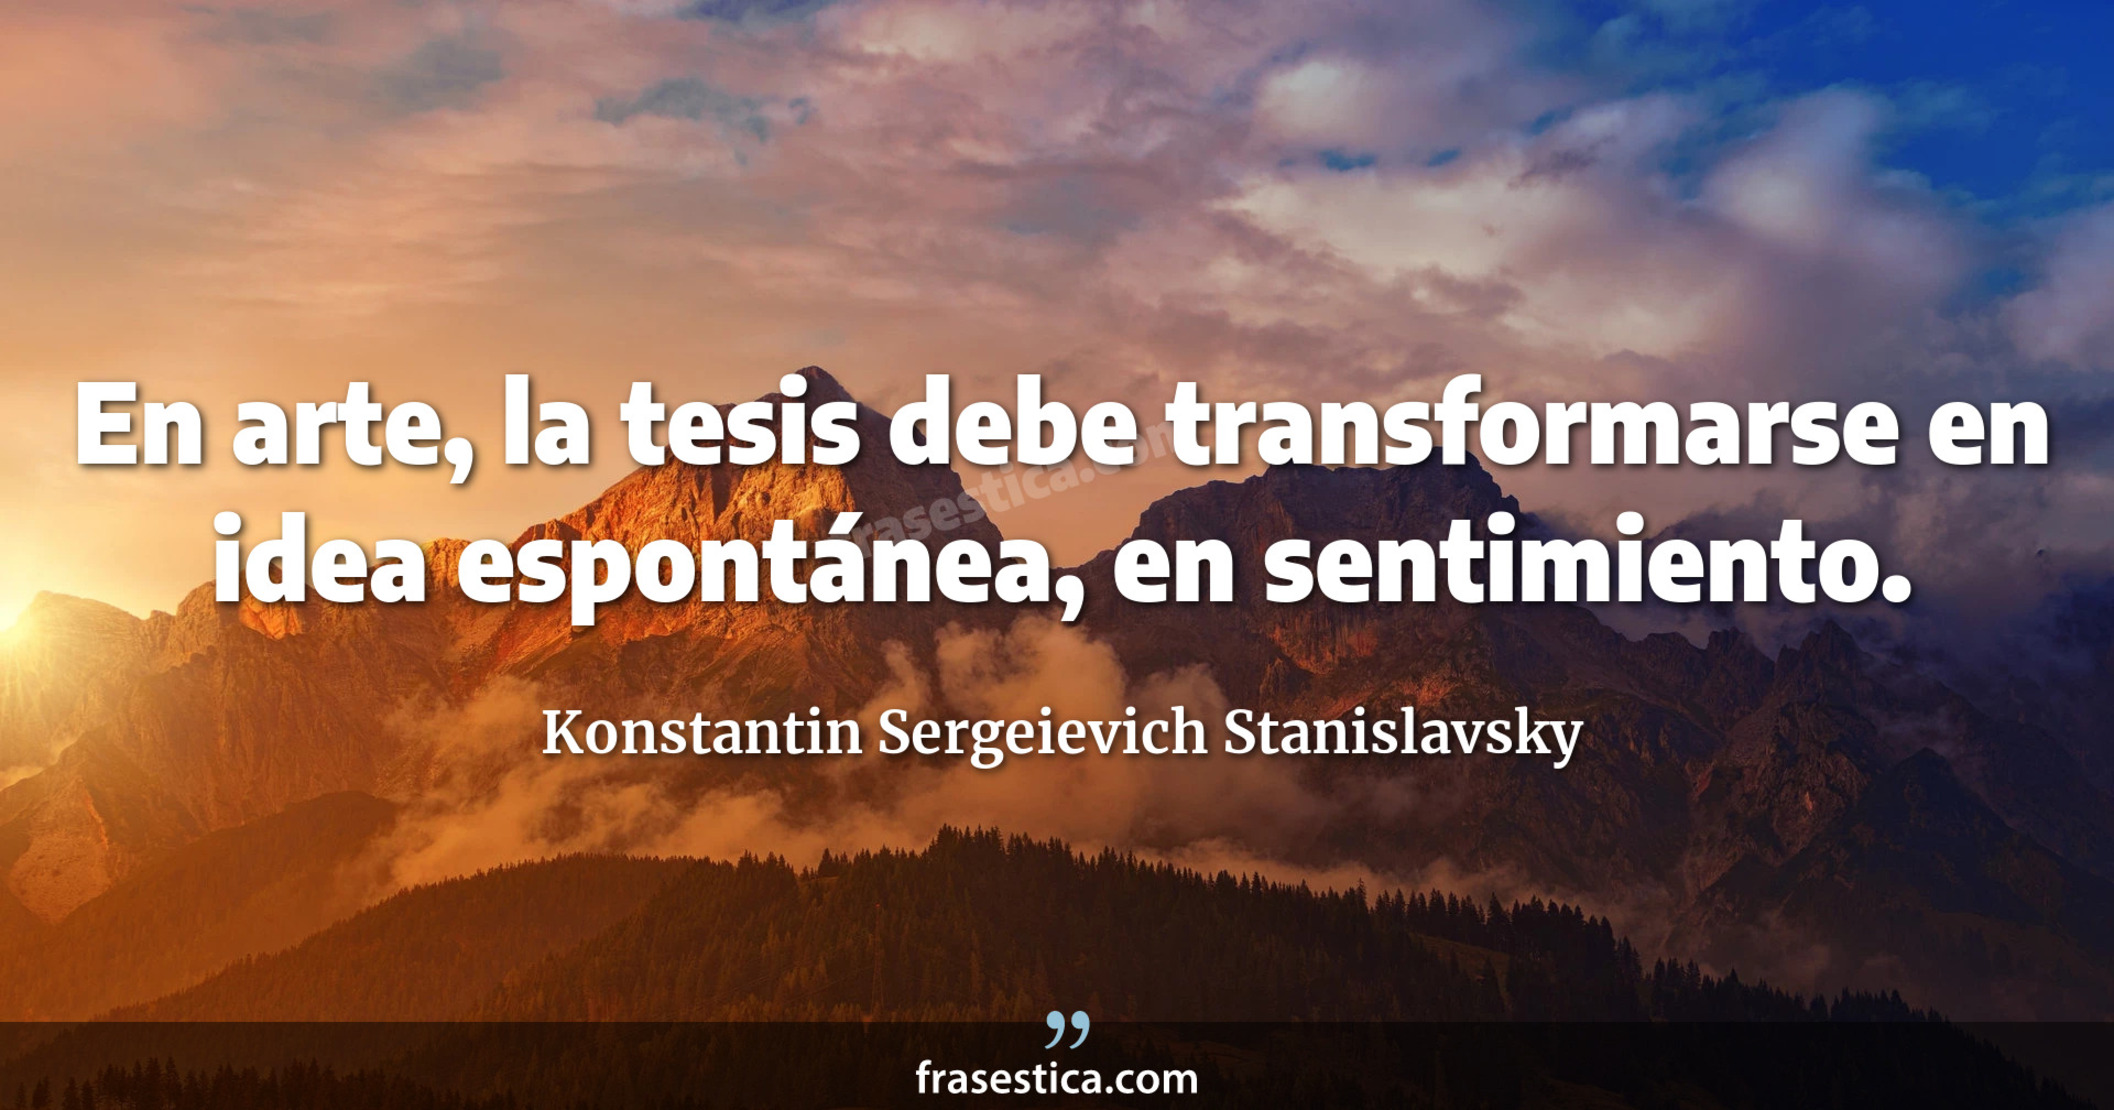 En arte, la tesis debe transformarse en idea espontánea, en sentimiento. - Konstantin Sergeievich Stanislavsky